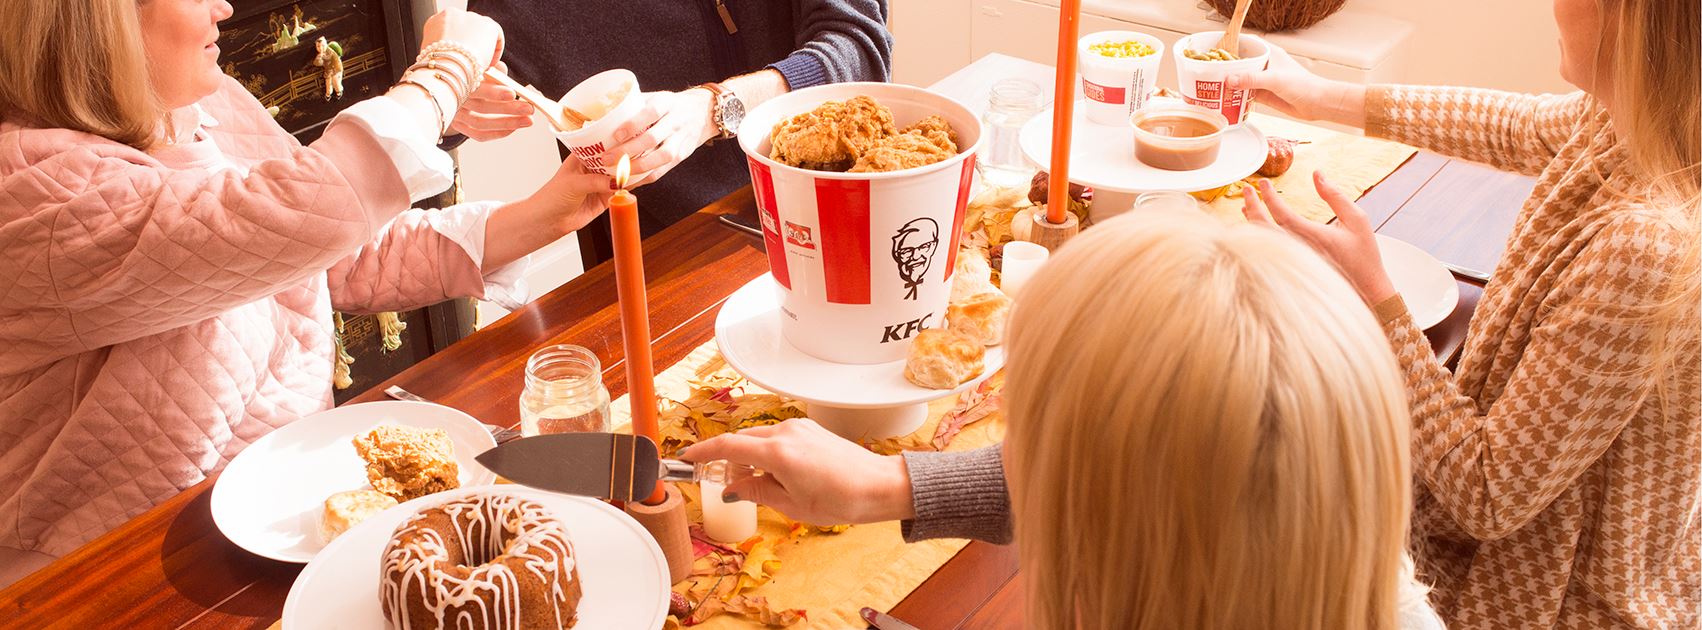 KFC Kentucky Fried Chicken - Lantana Informative